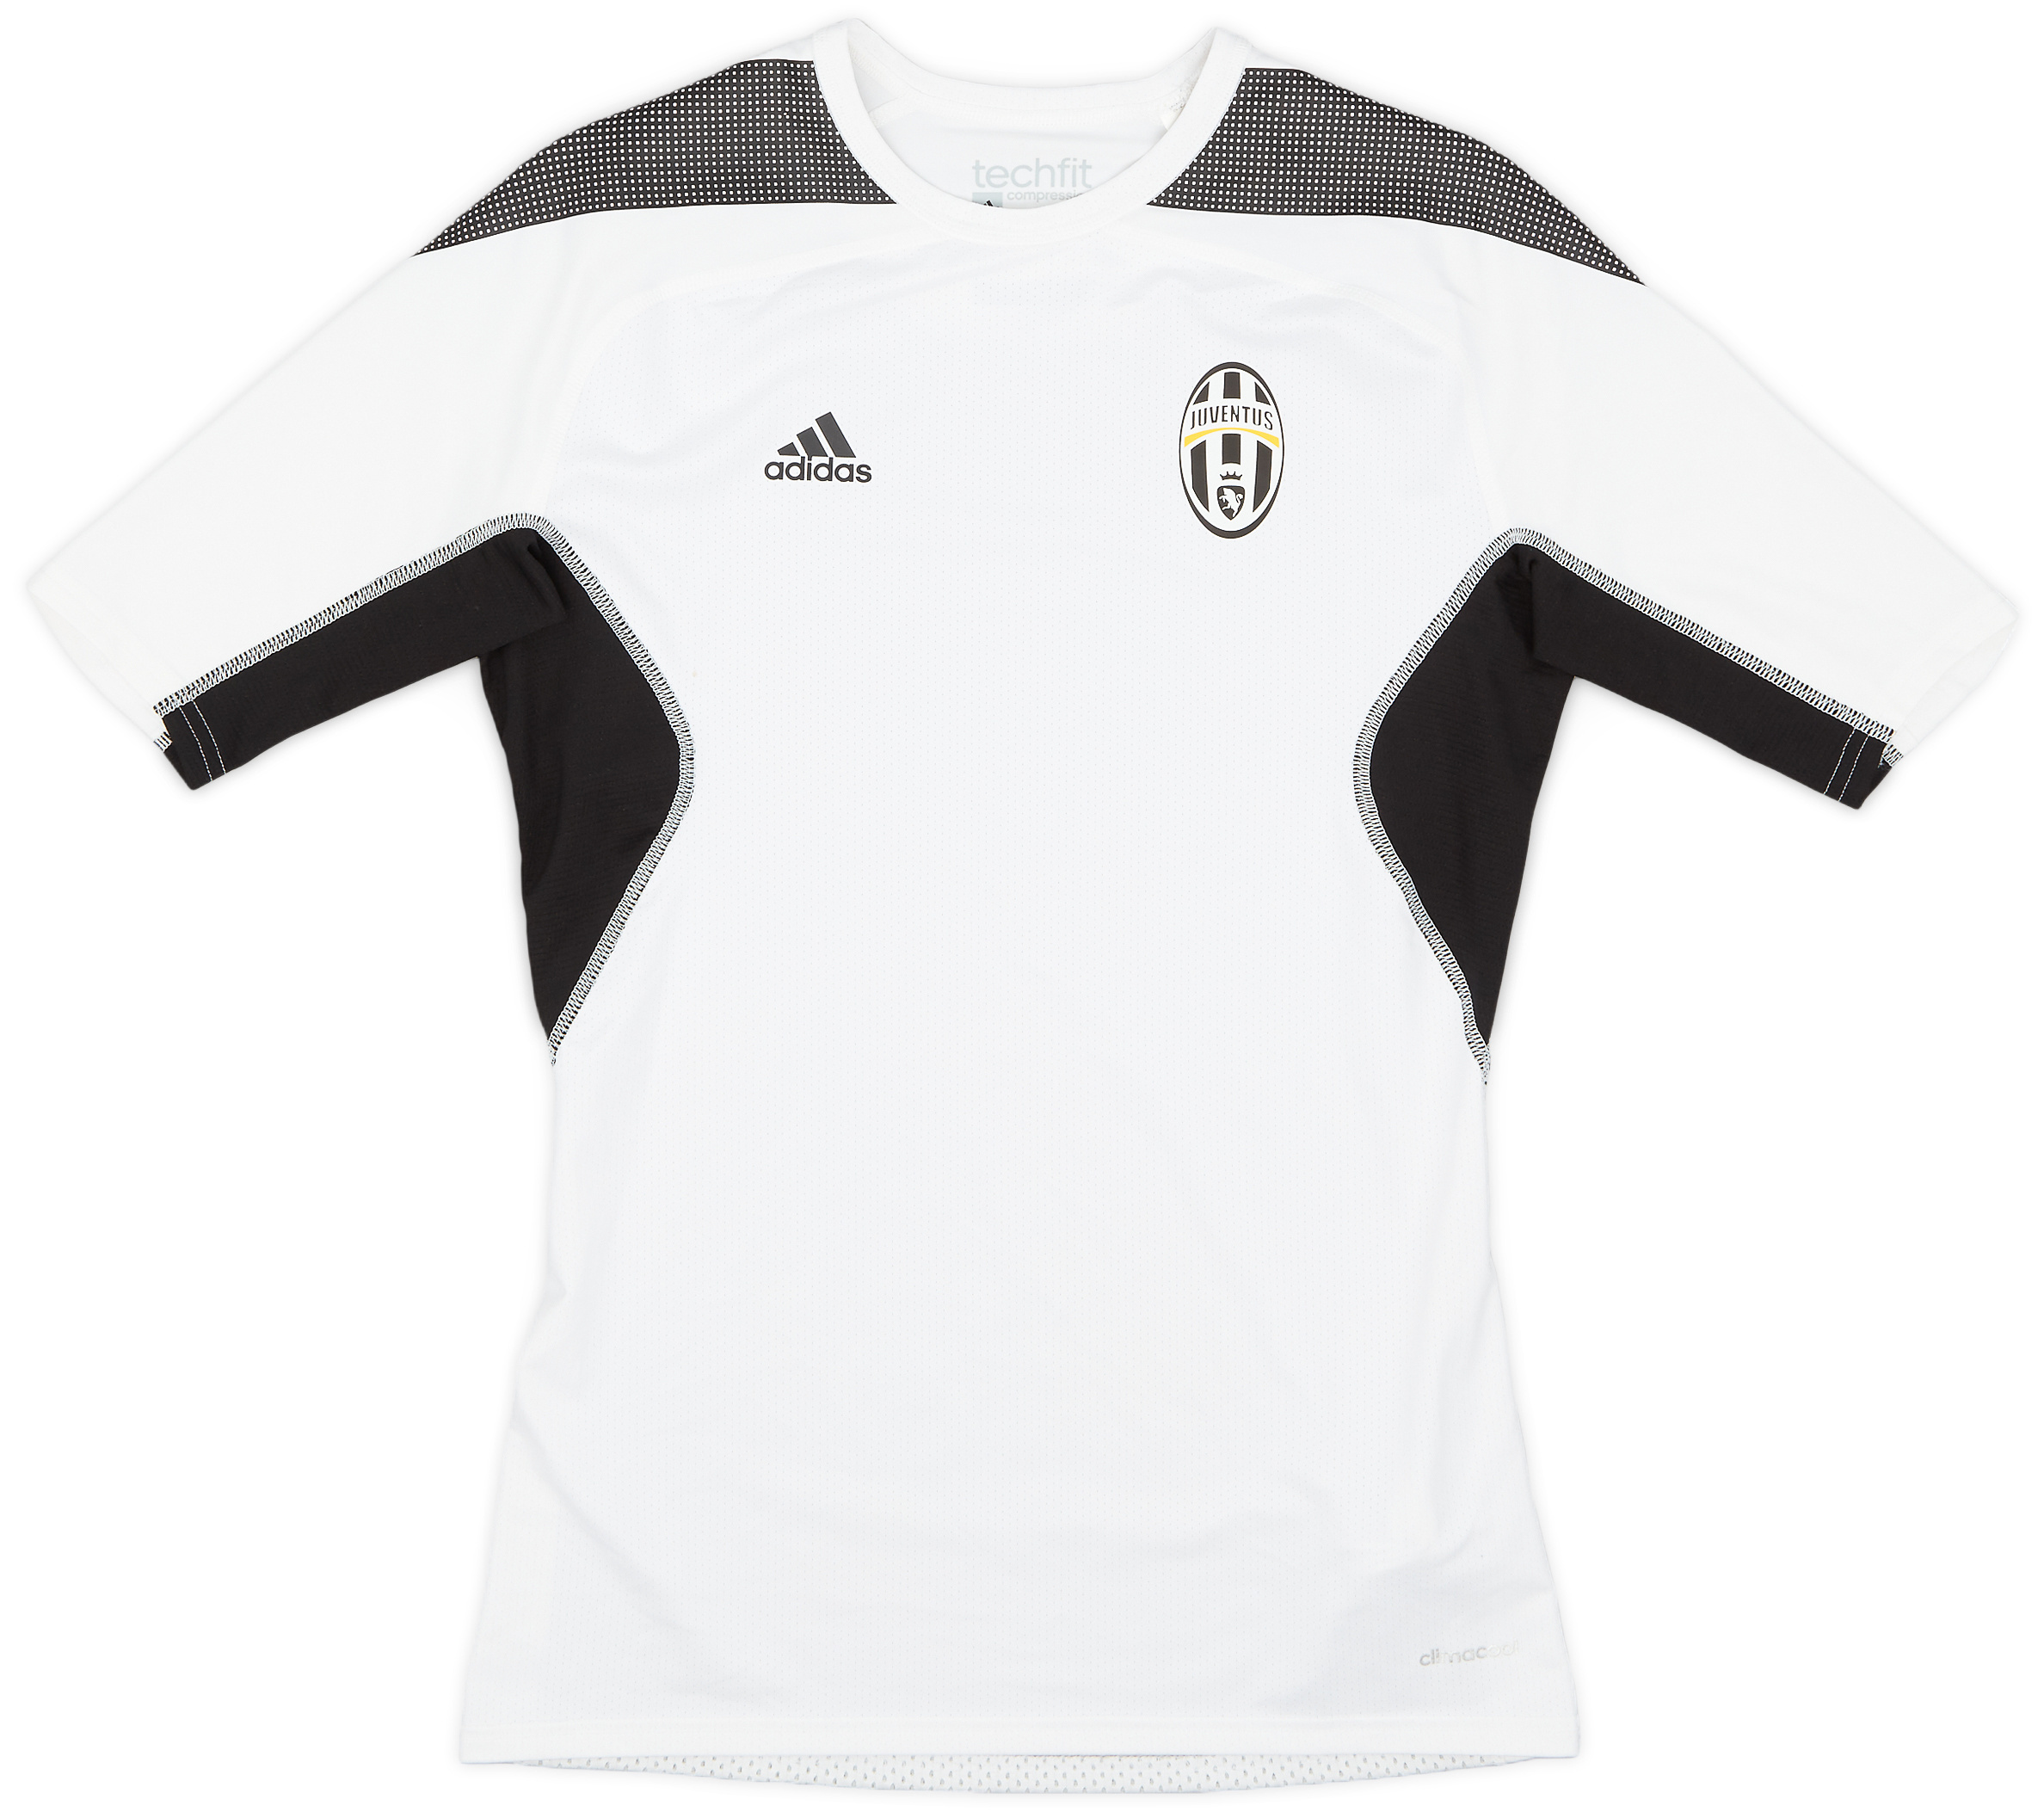 2015-16 Juventus adidas TechFit Compression Shirt - 9/10 - ()